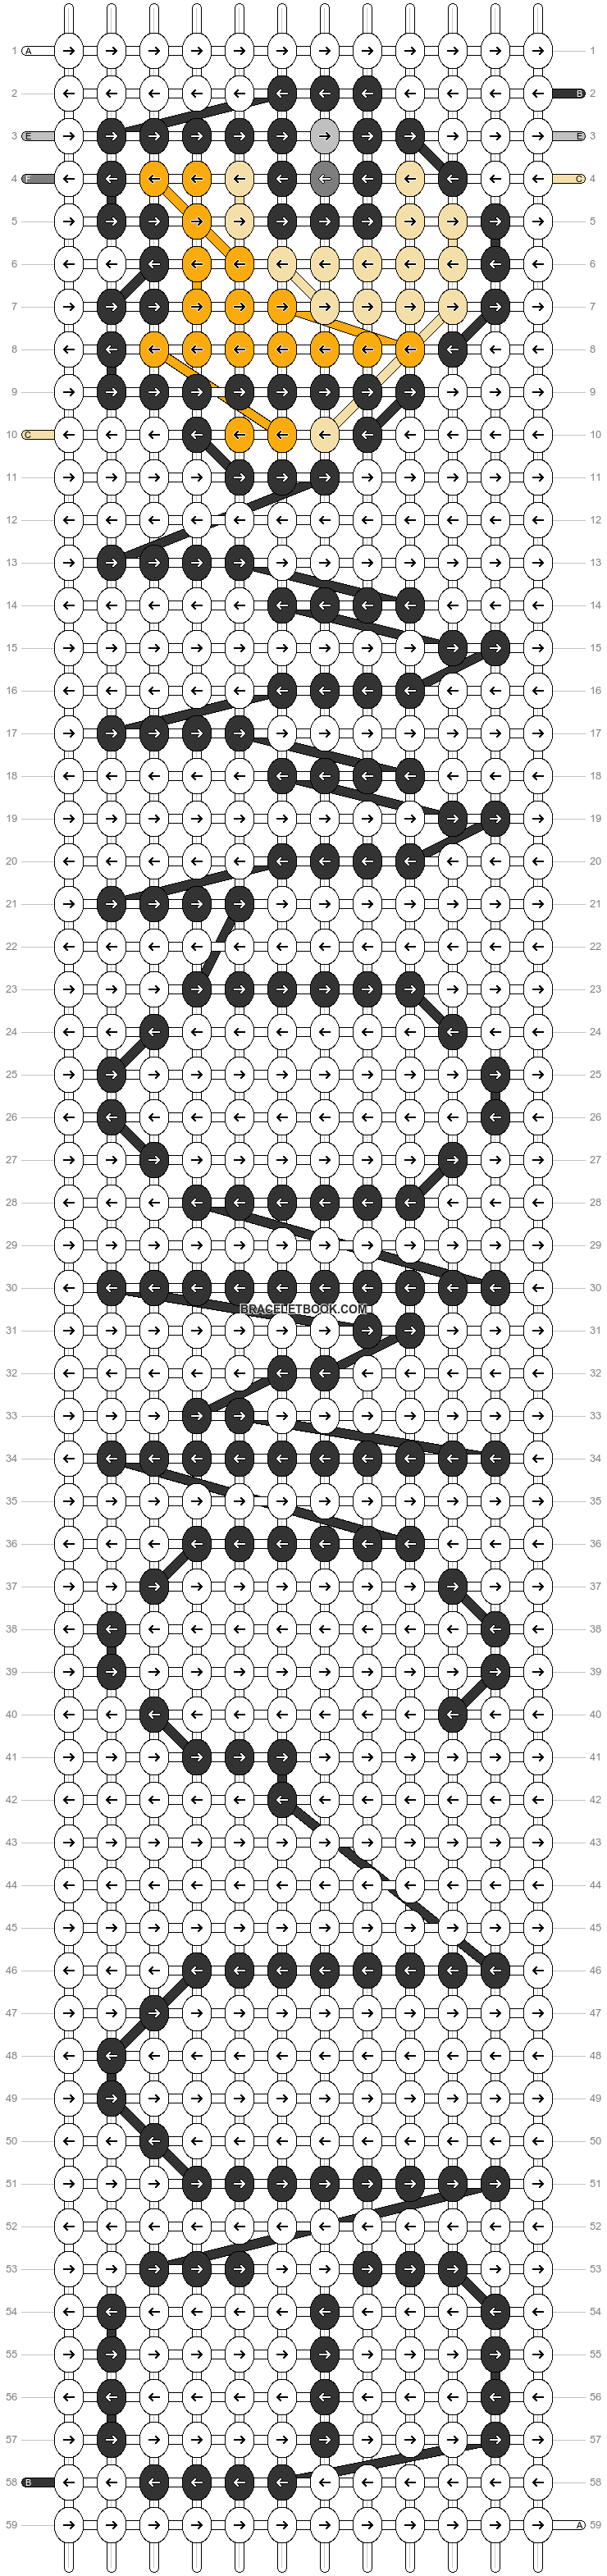 Alpha pattern #55655 variation #96795 pattern